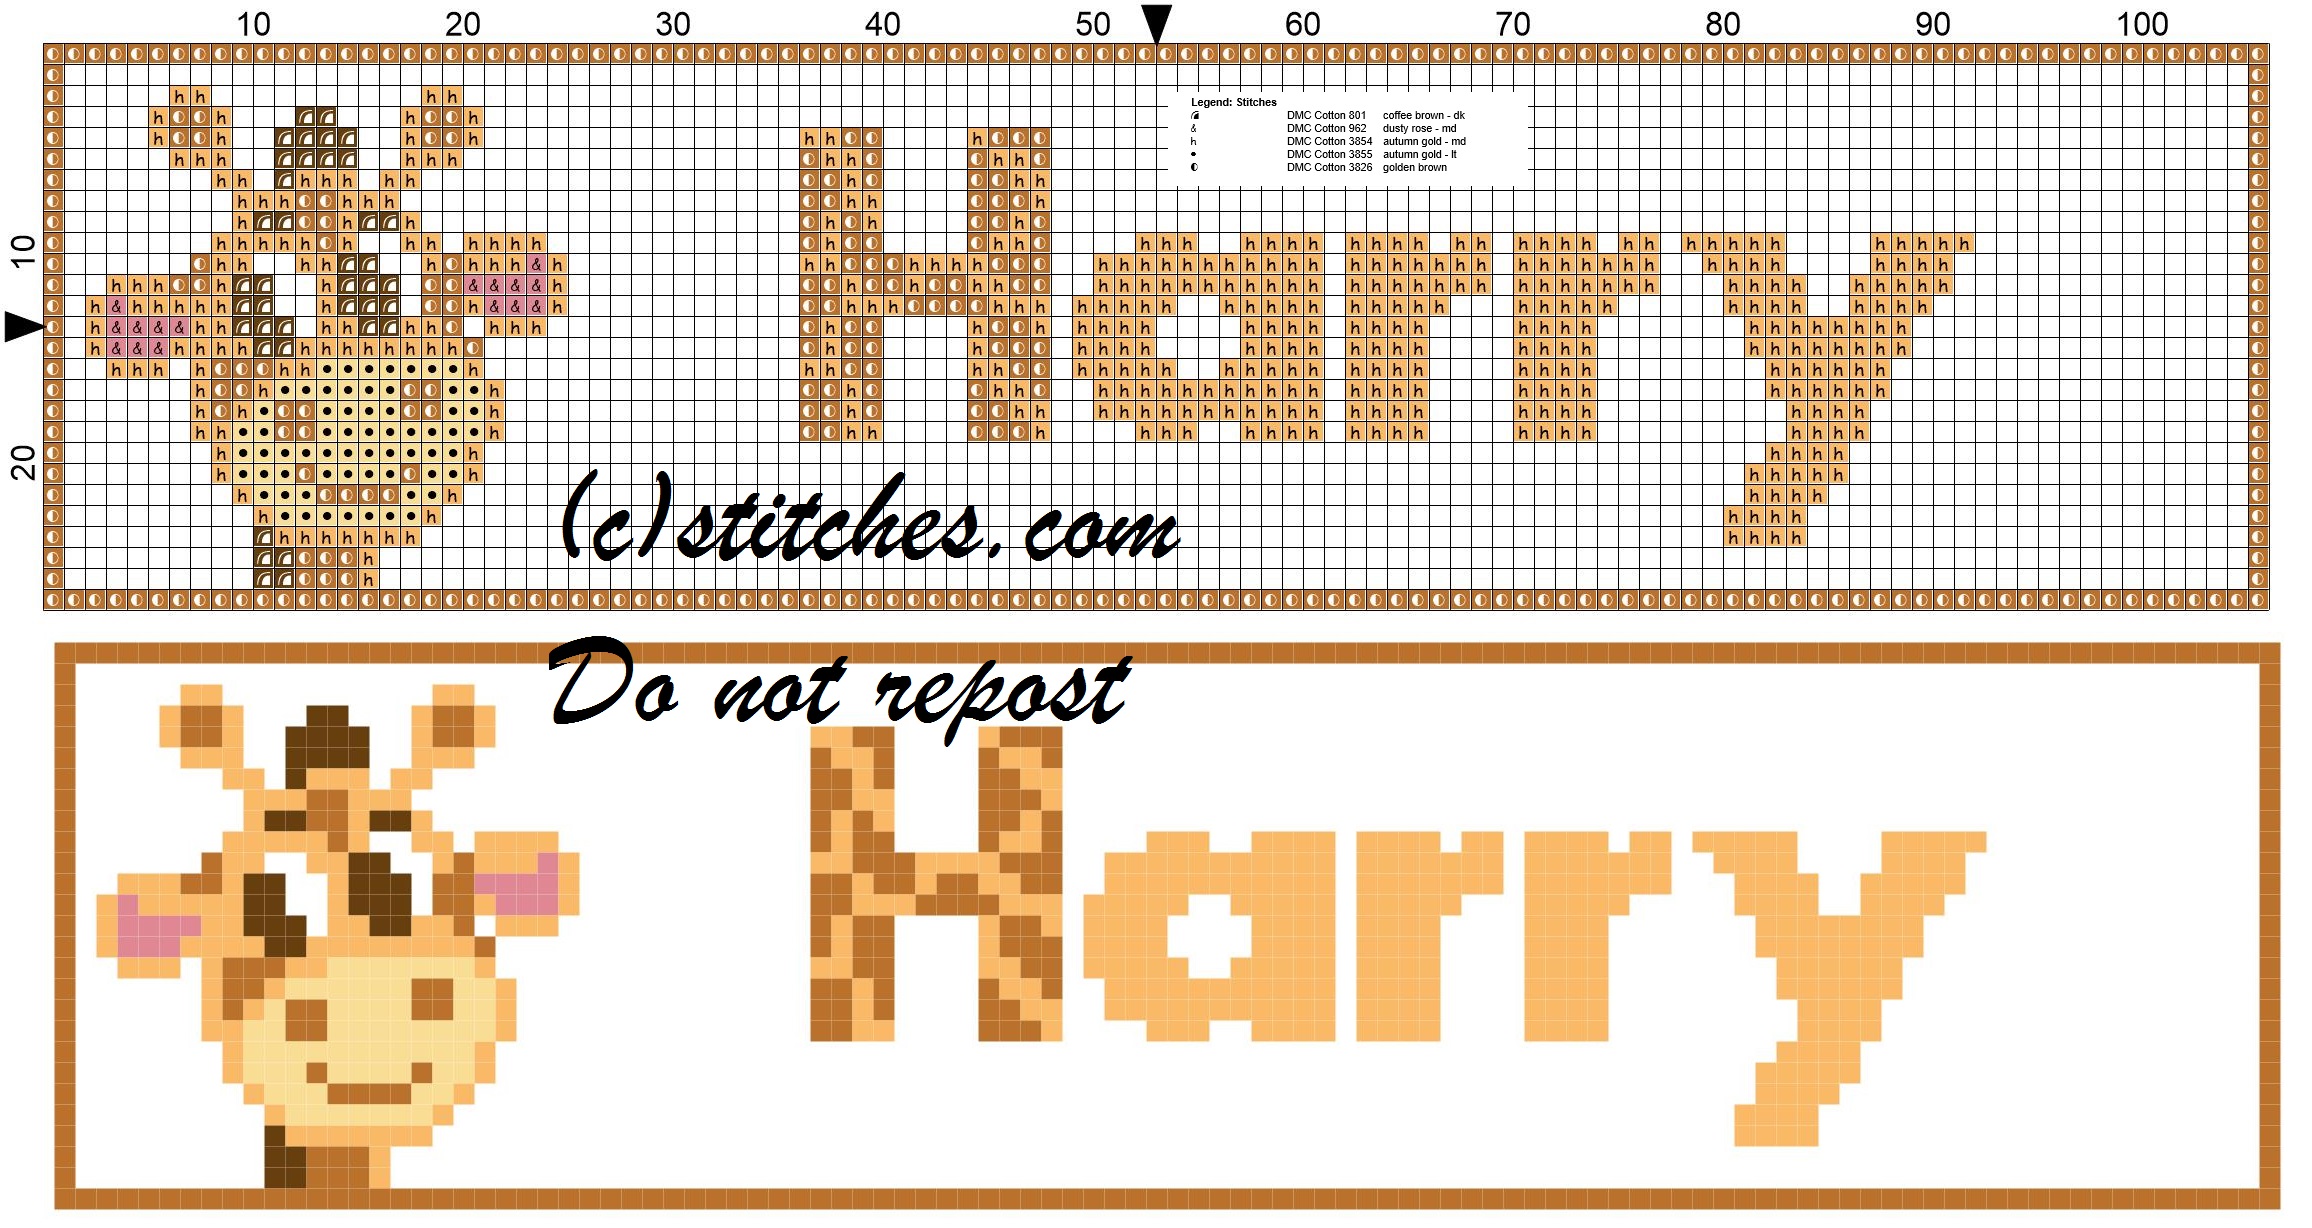 Harry name with giraffe cross stitch pattern